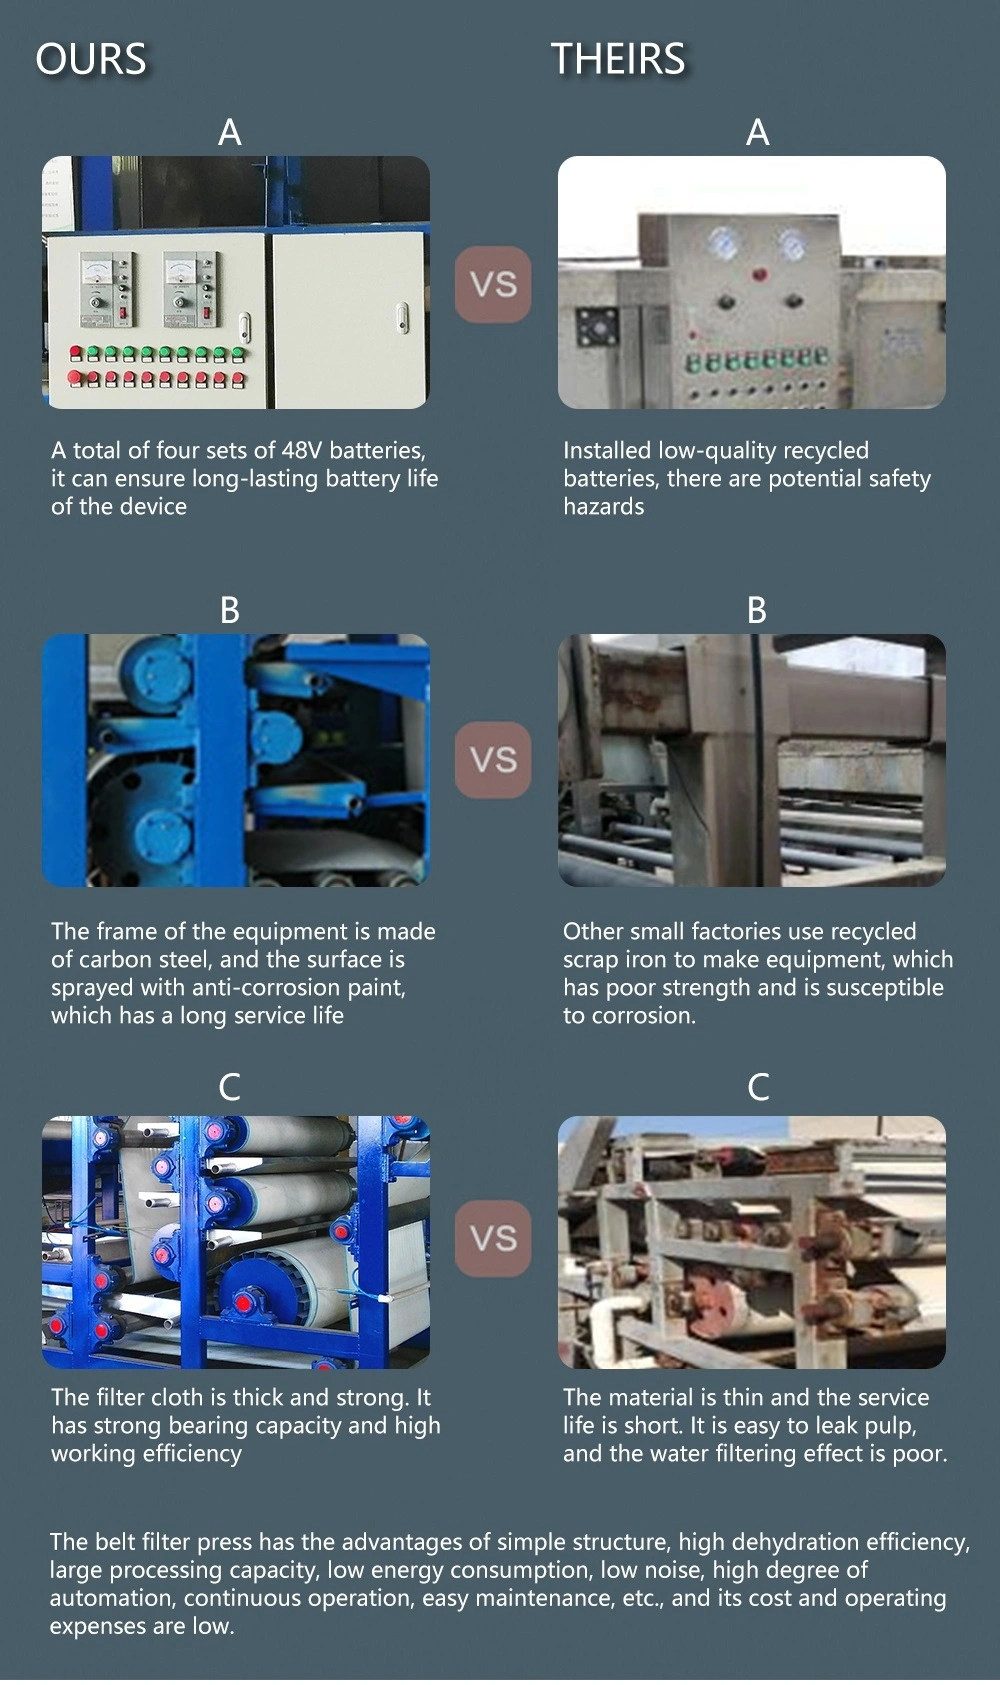 Factory Price Automatic Belt Filter Press Machine for Sludge/Slurry/Mud Dewatering